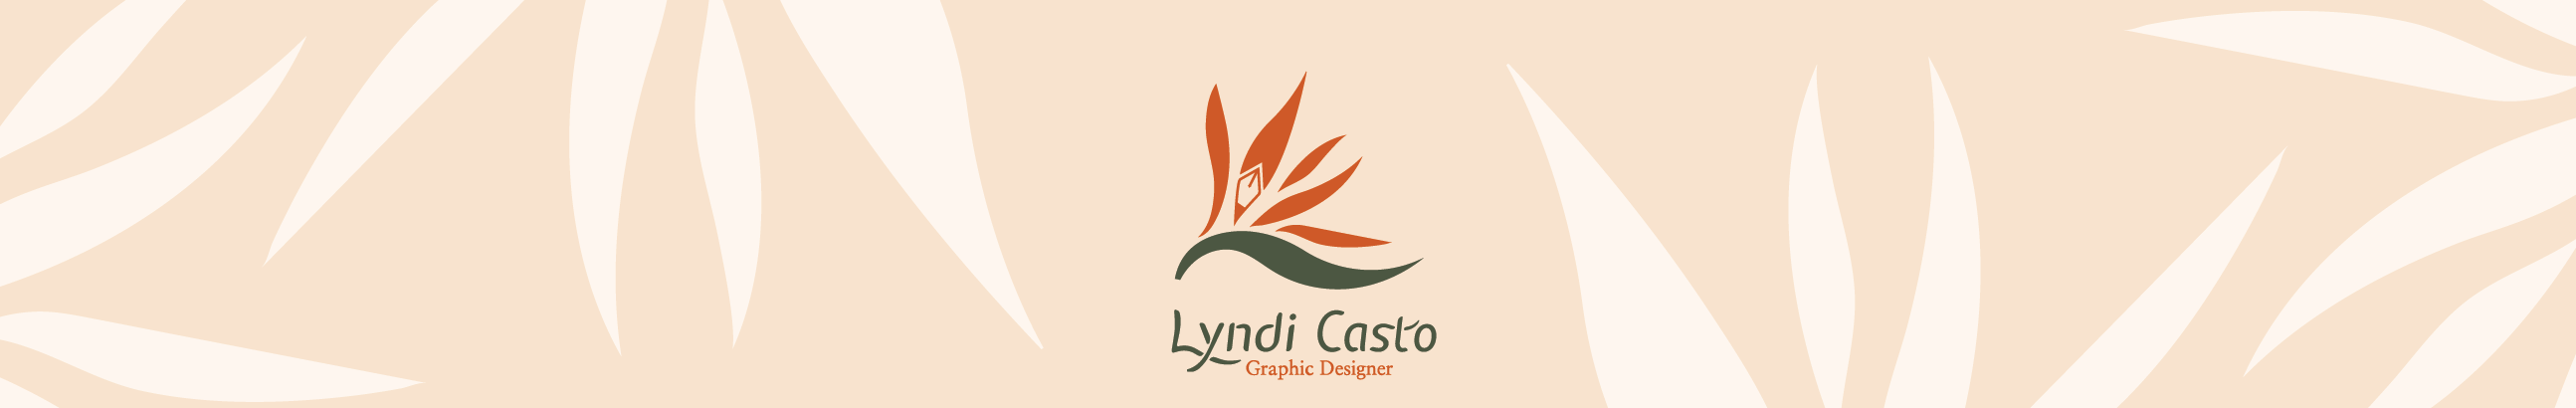 Lyndi Casto profil başlığı